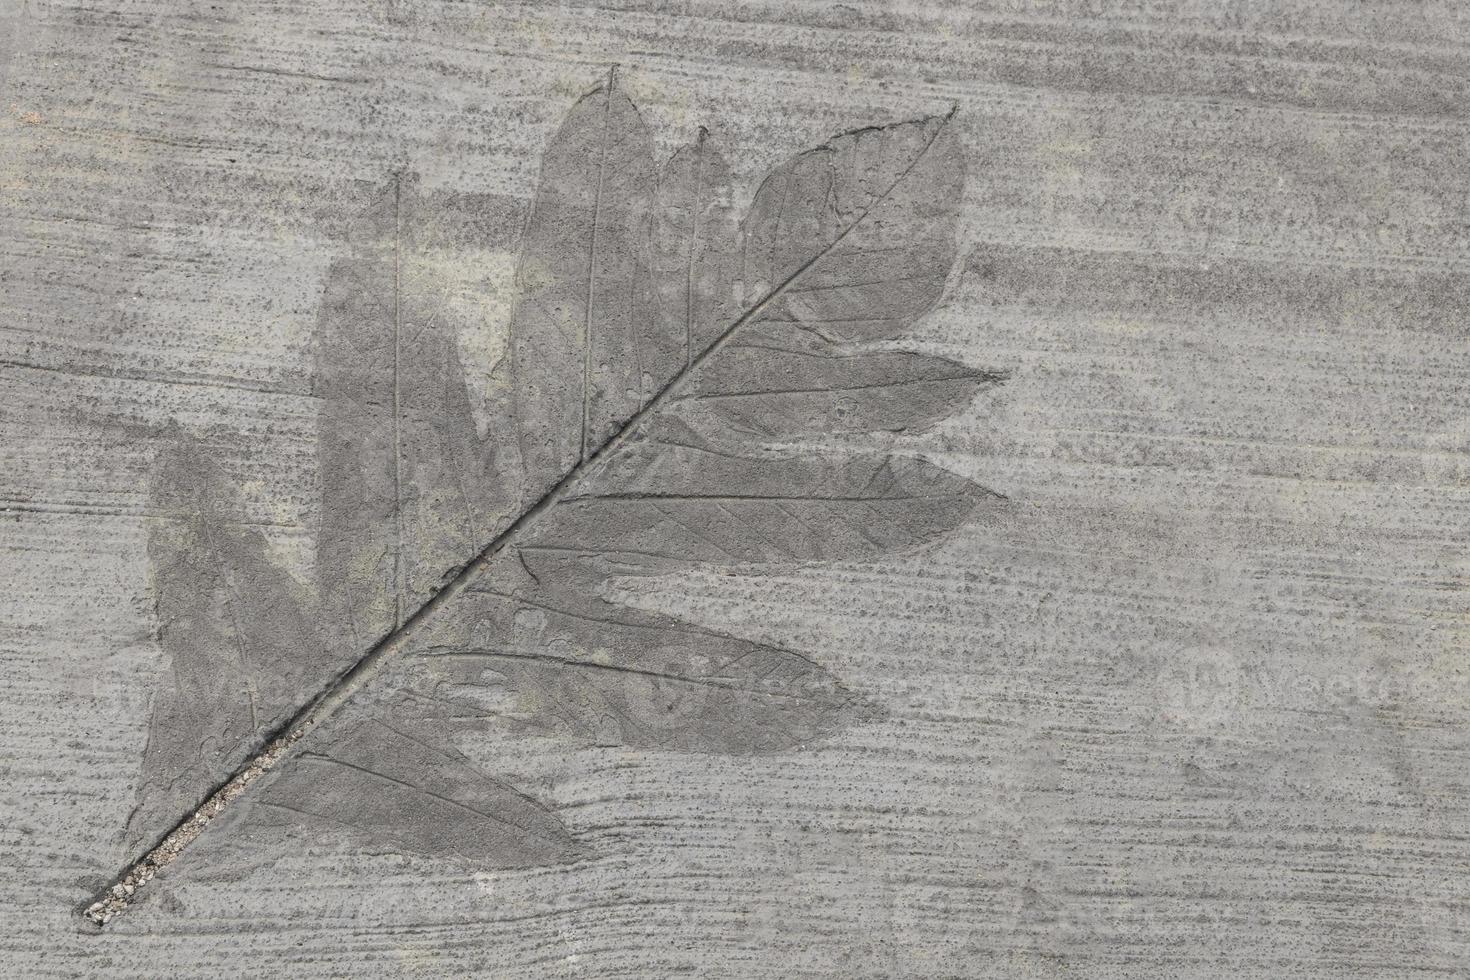 ingelegd blad in beton op de stoep. foto